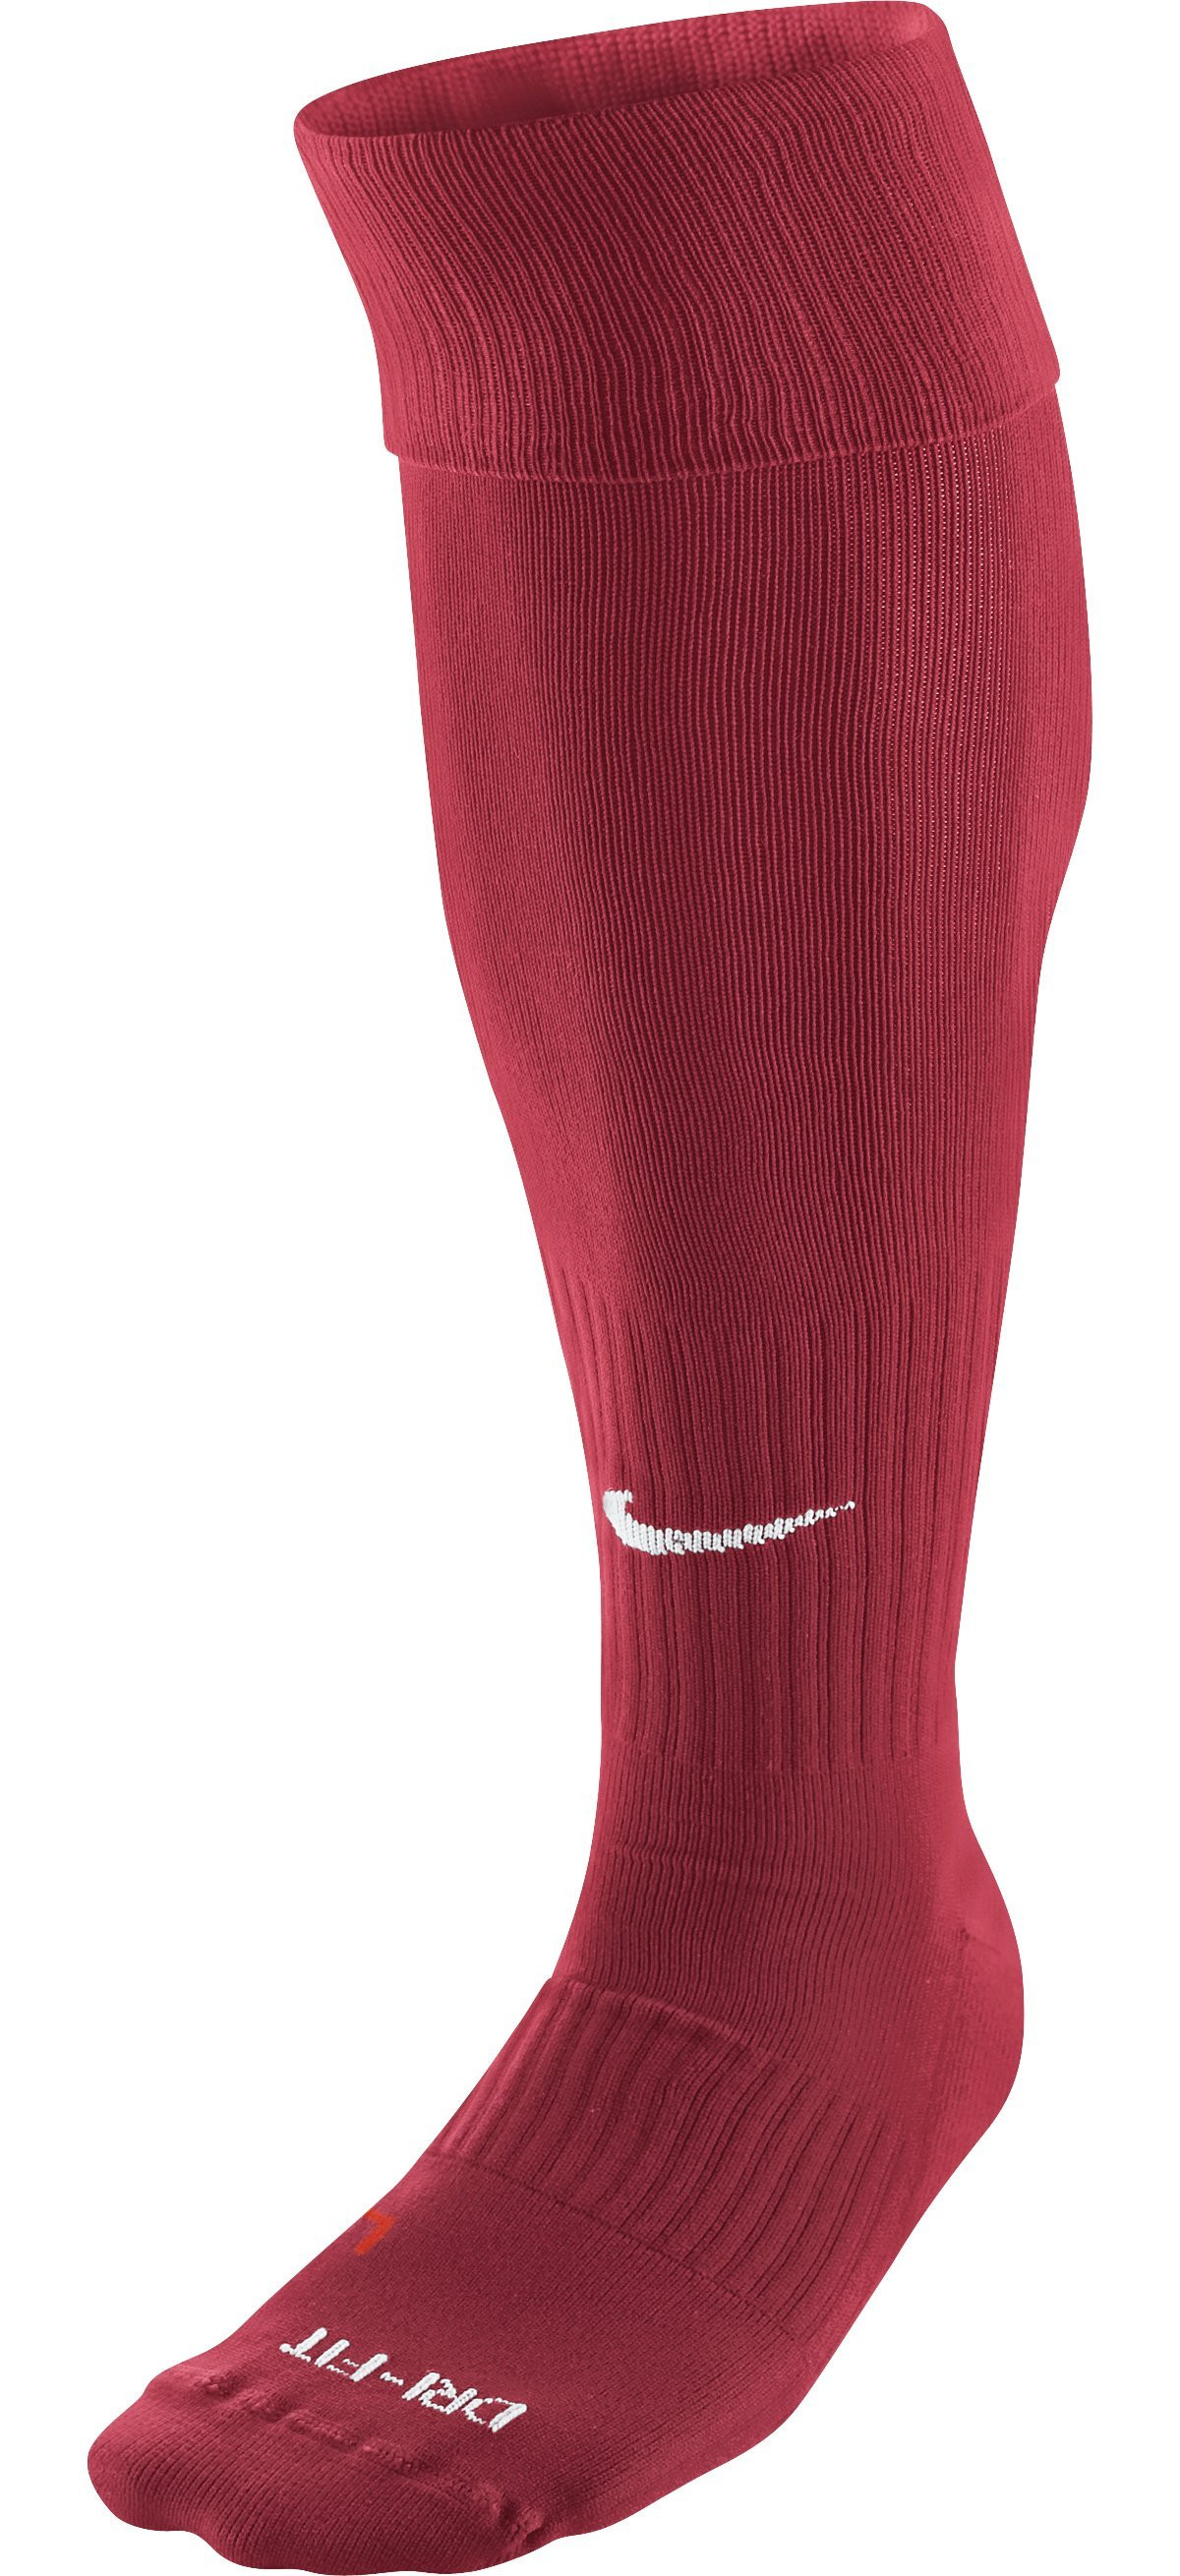 Chaussettes de football Nike Academy - Rouge - SX4120-601